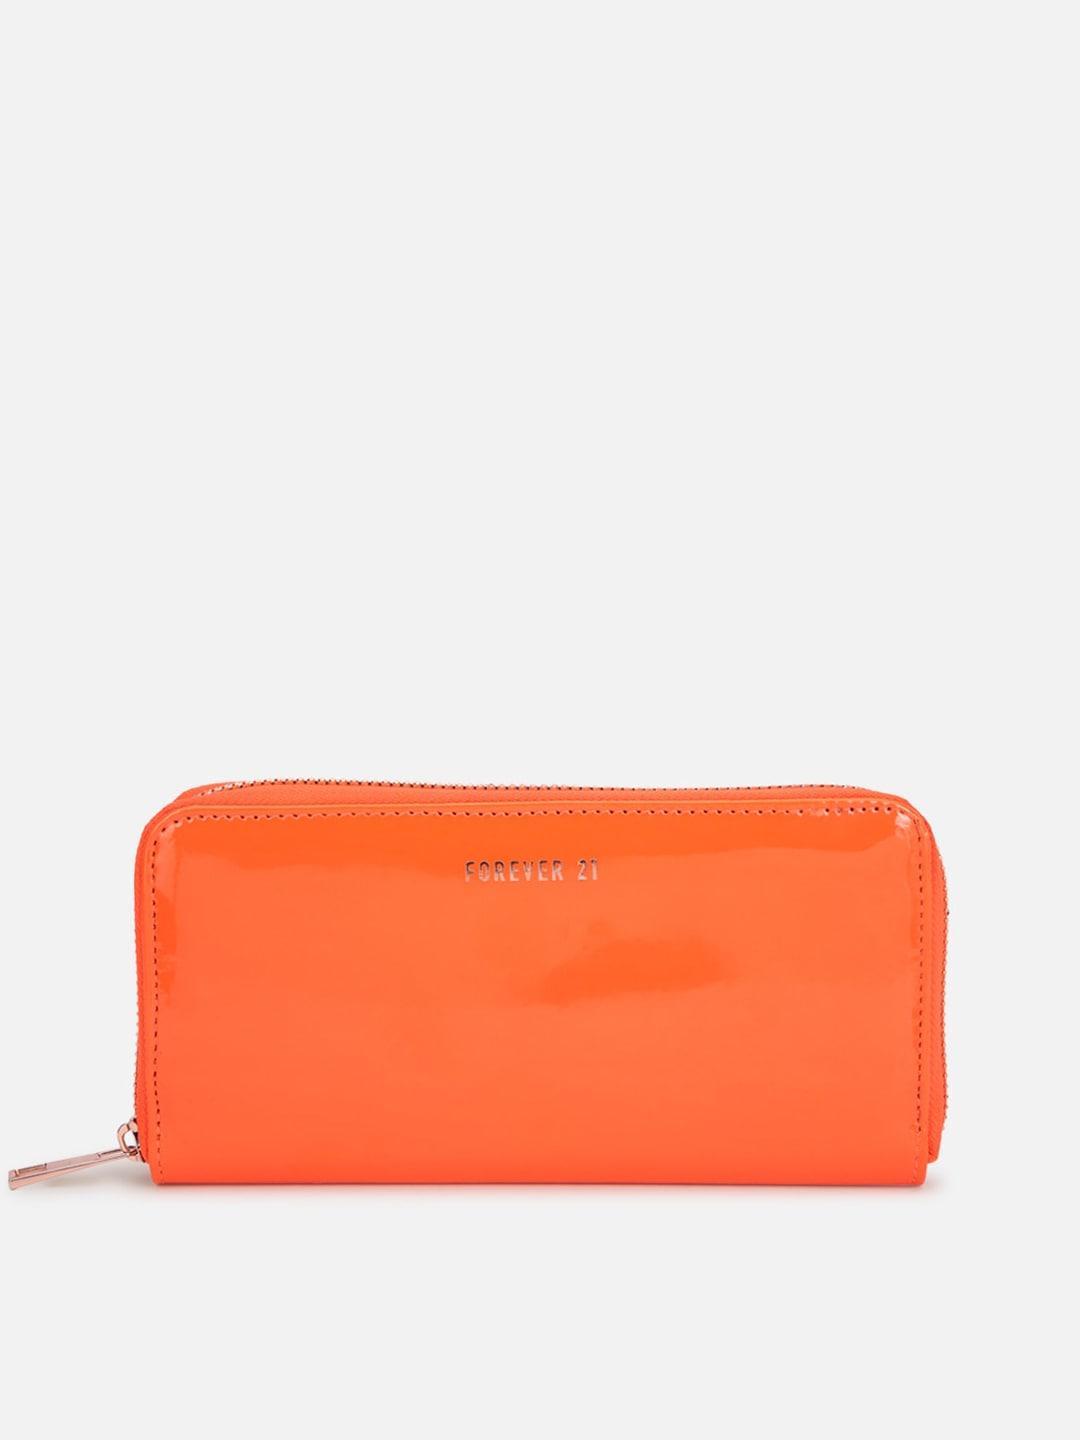 forever 21 women orange purse clutch